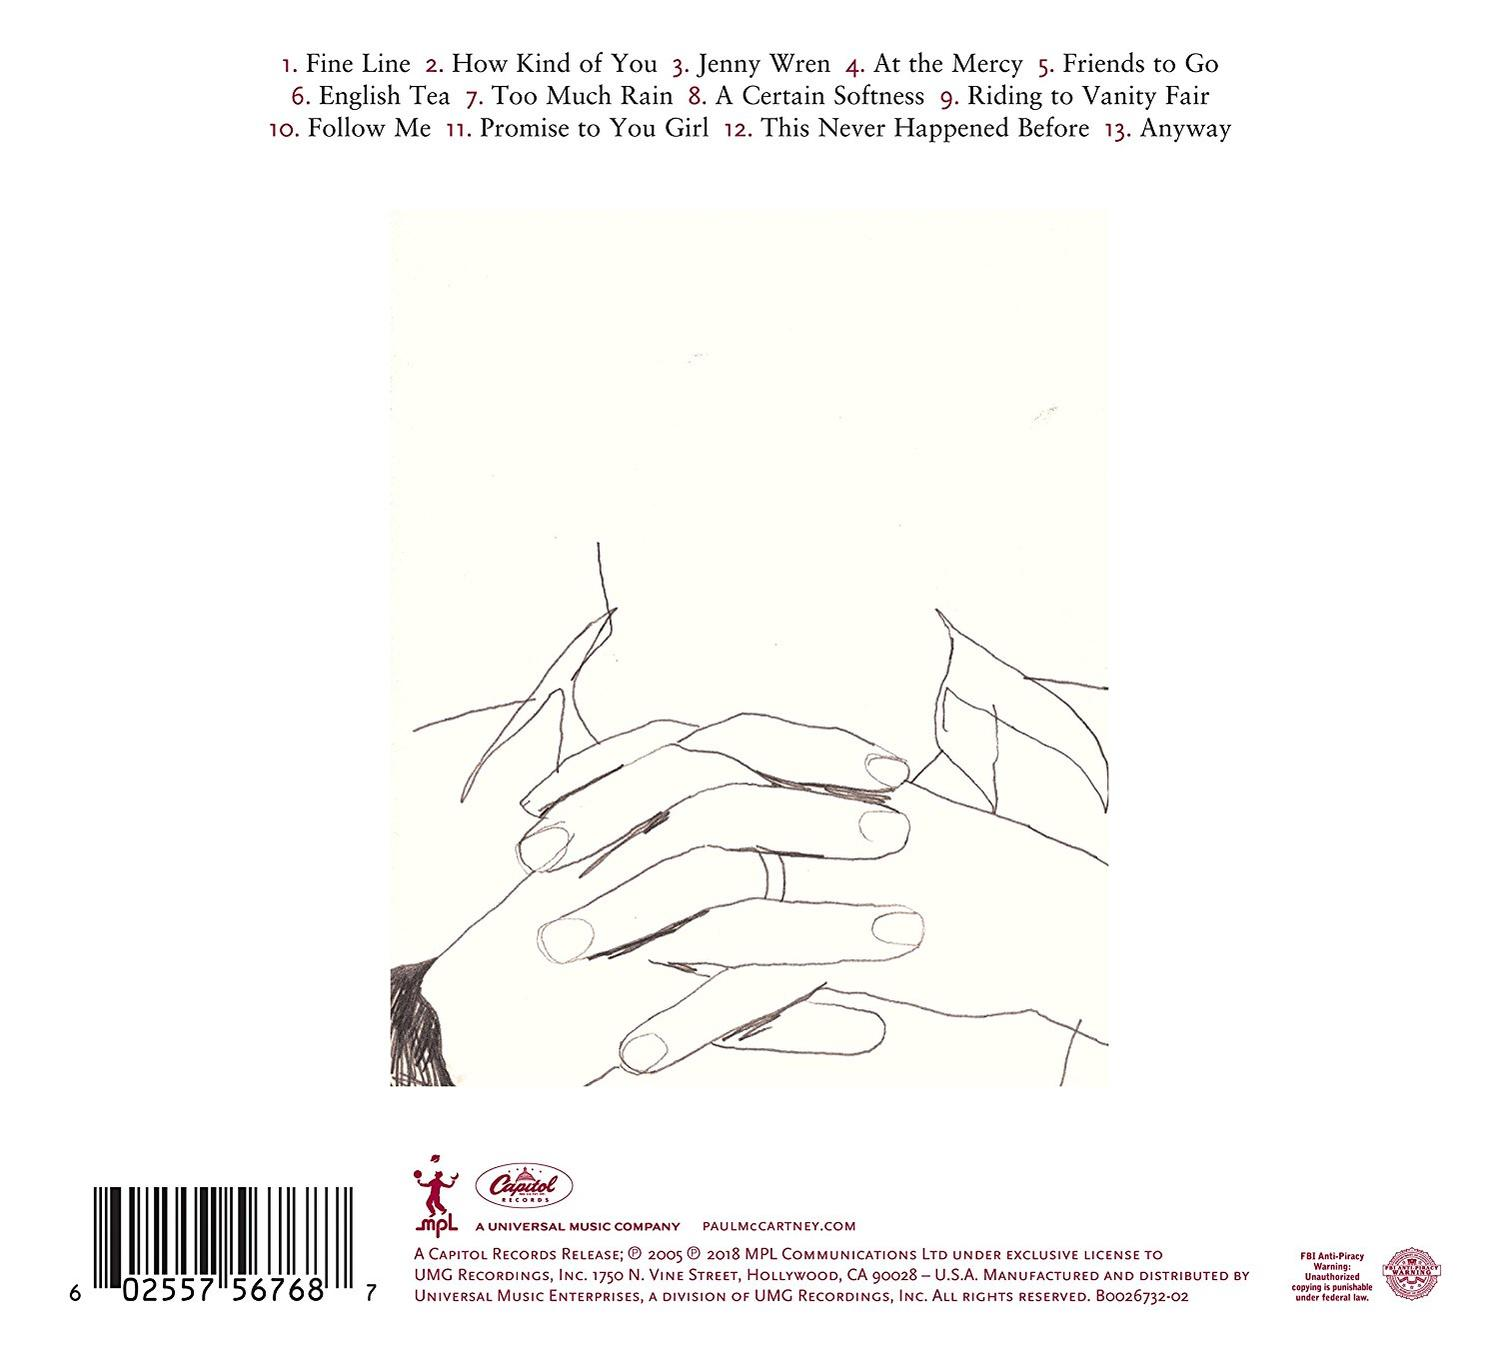 (CD) And The - Paul In Creation - Chaos McCartney Backyard (CD)